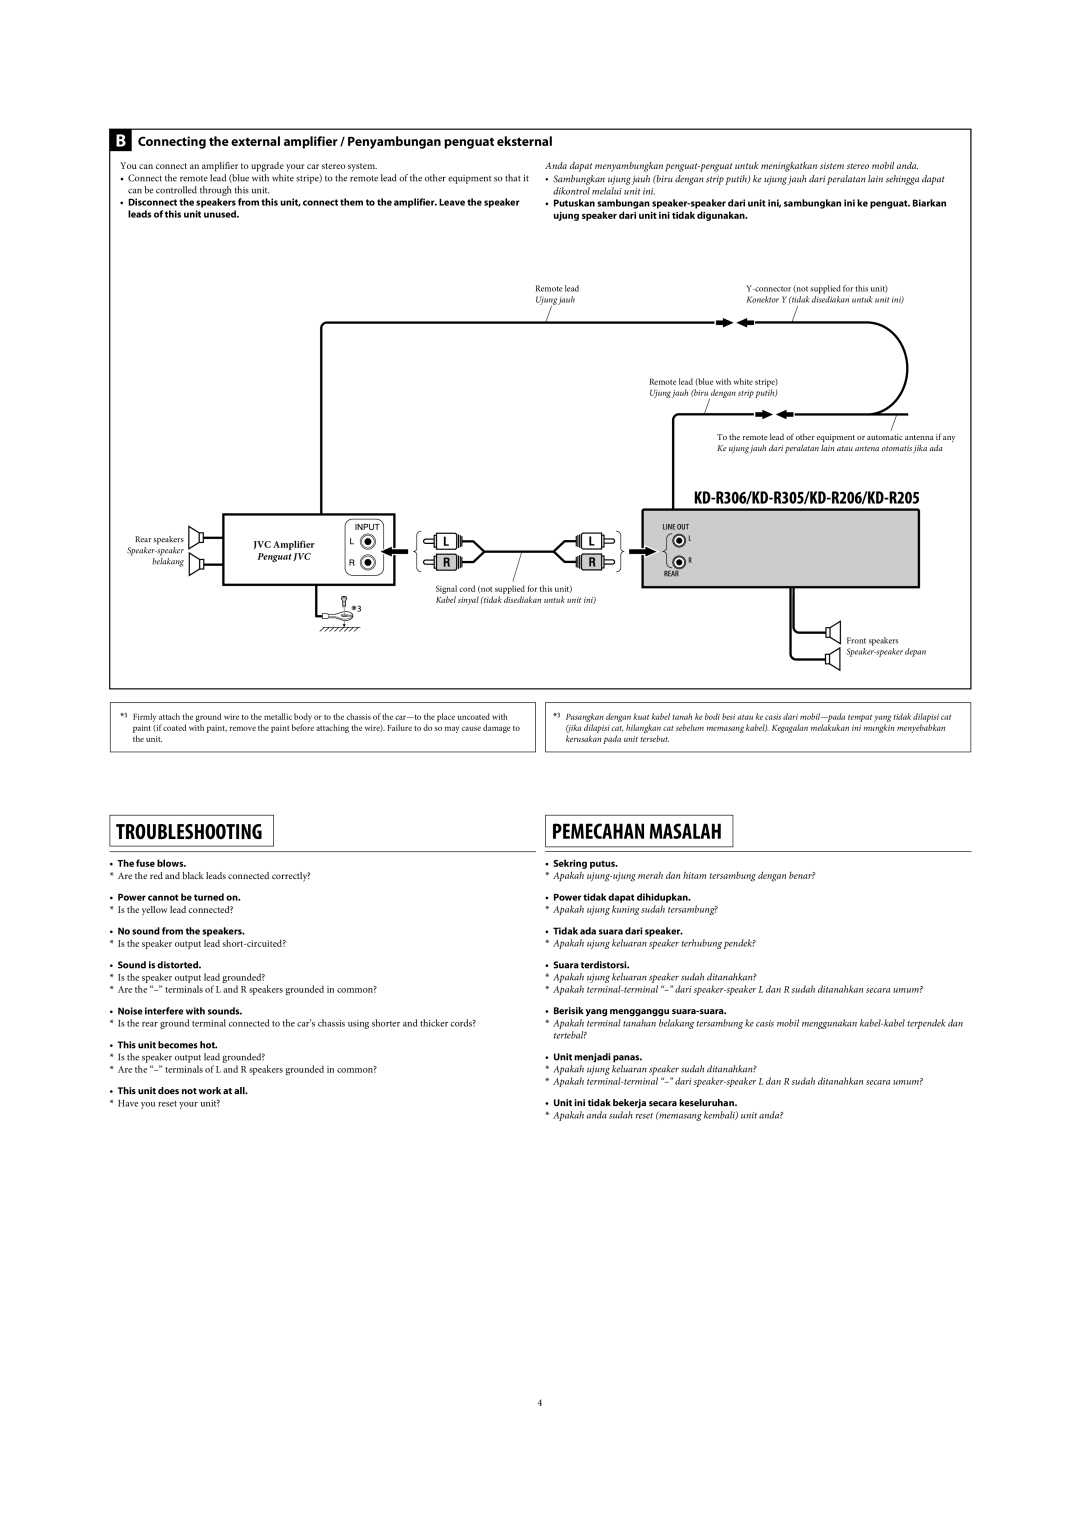 JVC KD-R301 manual Pemecahan Masalah, B Connecting the external amplifier / Penyambungan penguat eksternal, Troubleshooting 